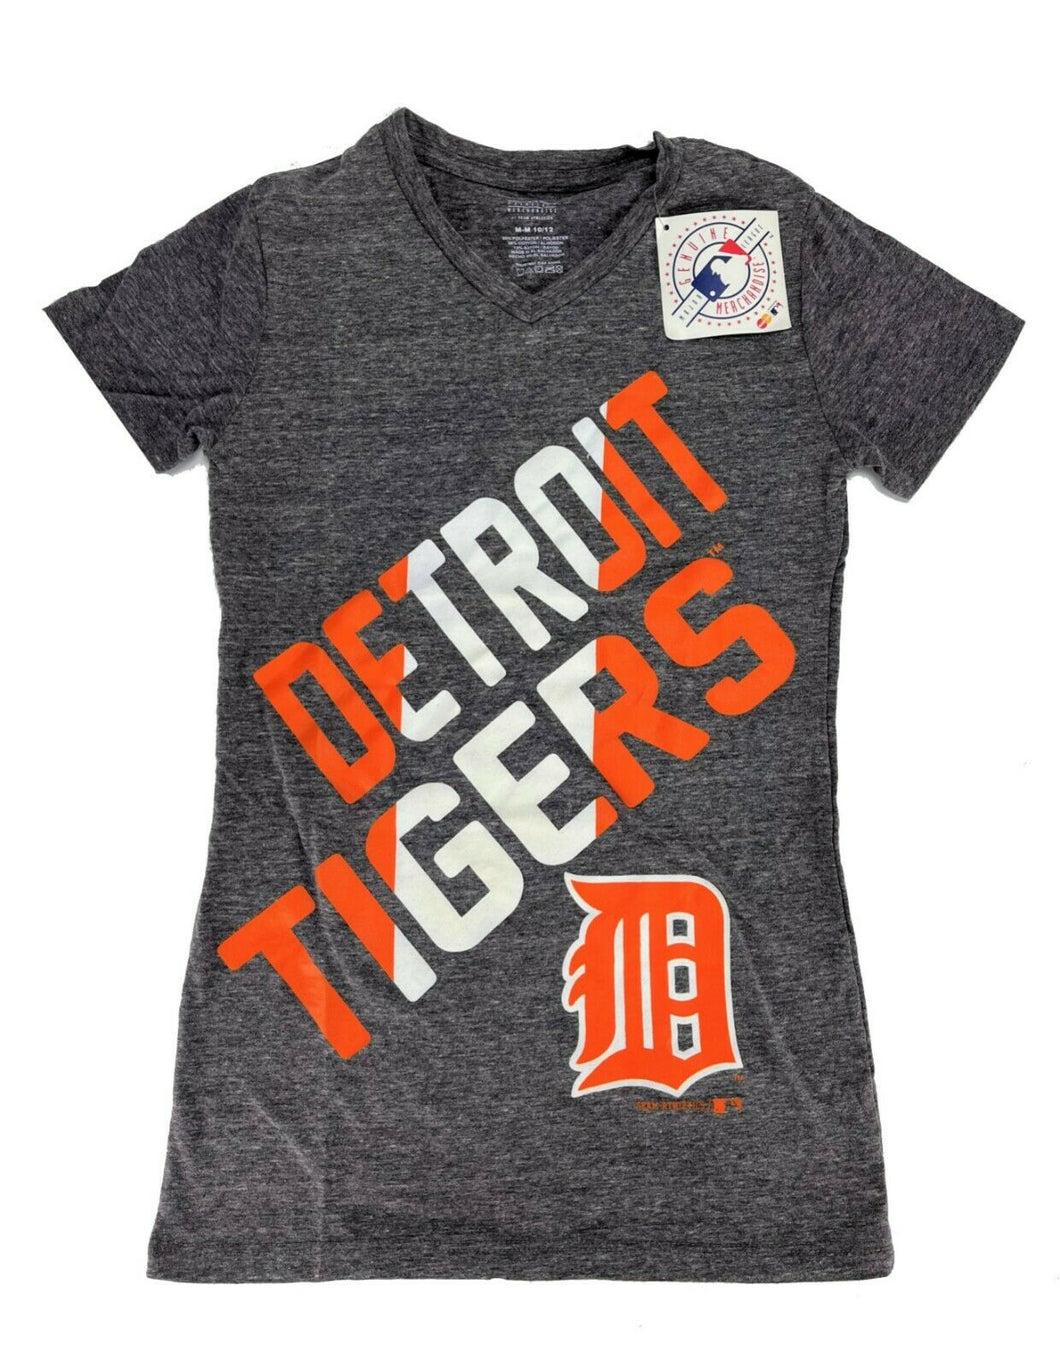 Detroit Tigers Girls Tri-blend V-Neck T-Shirt, Heathered Gray, Med (10/12)